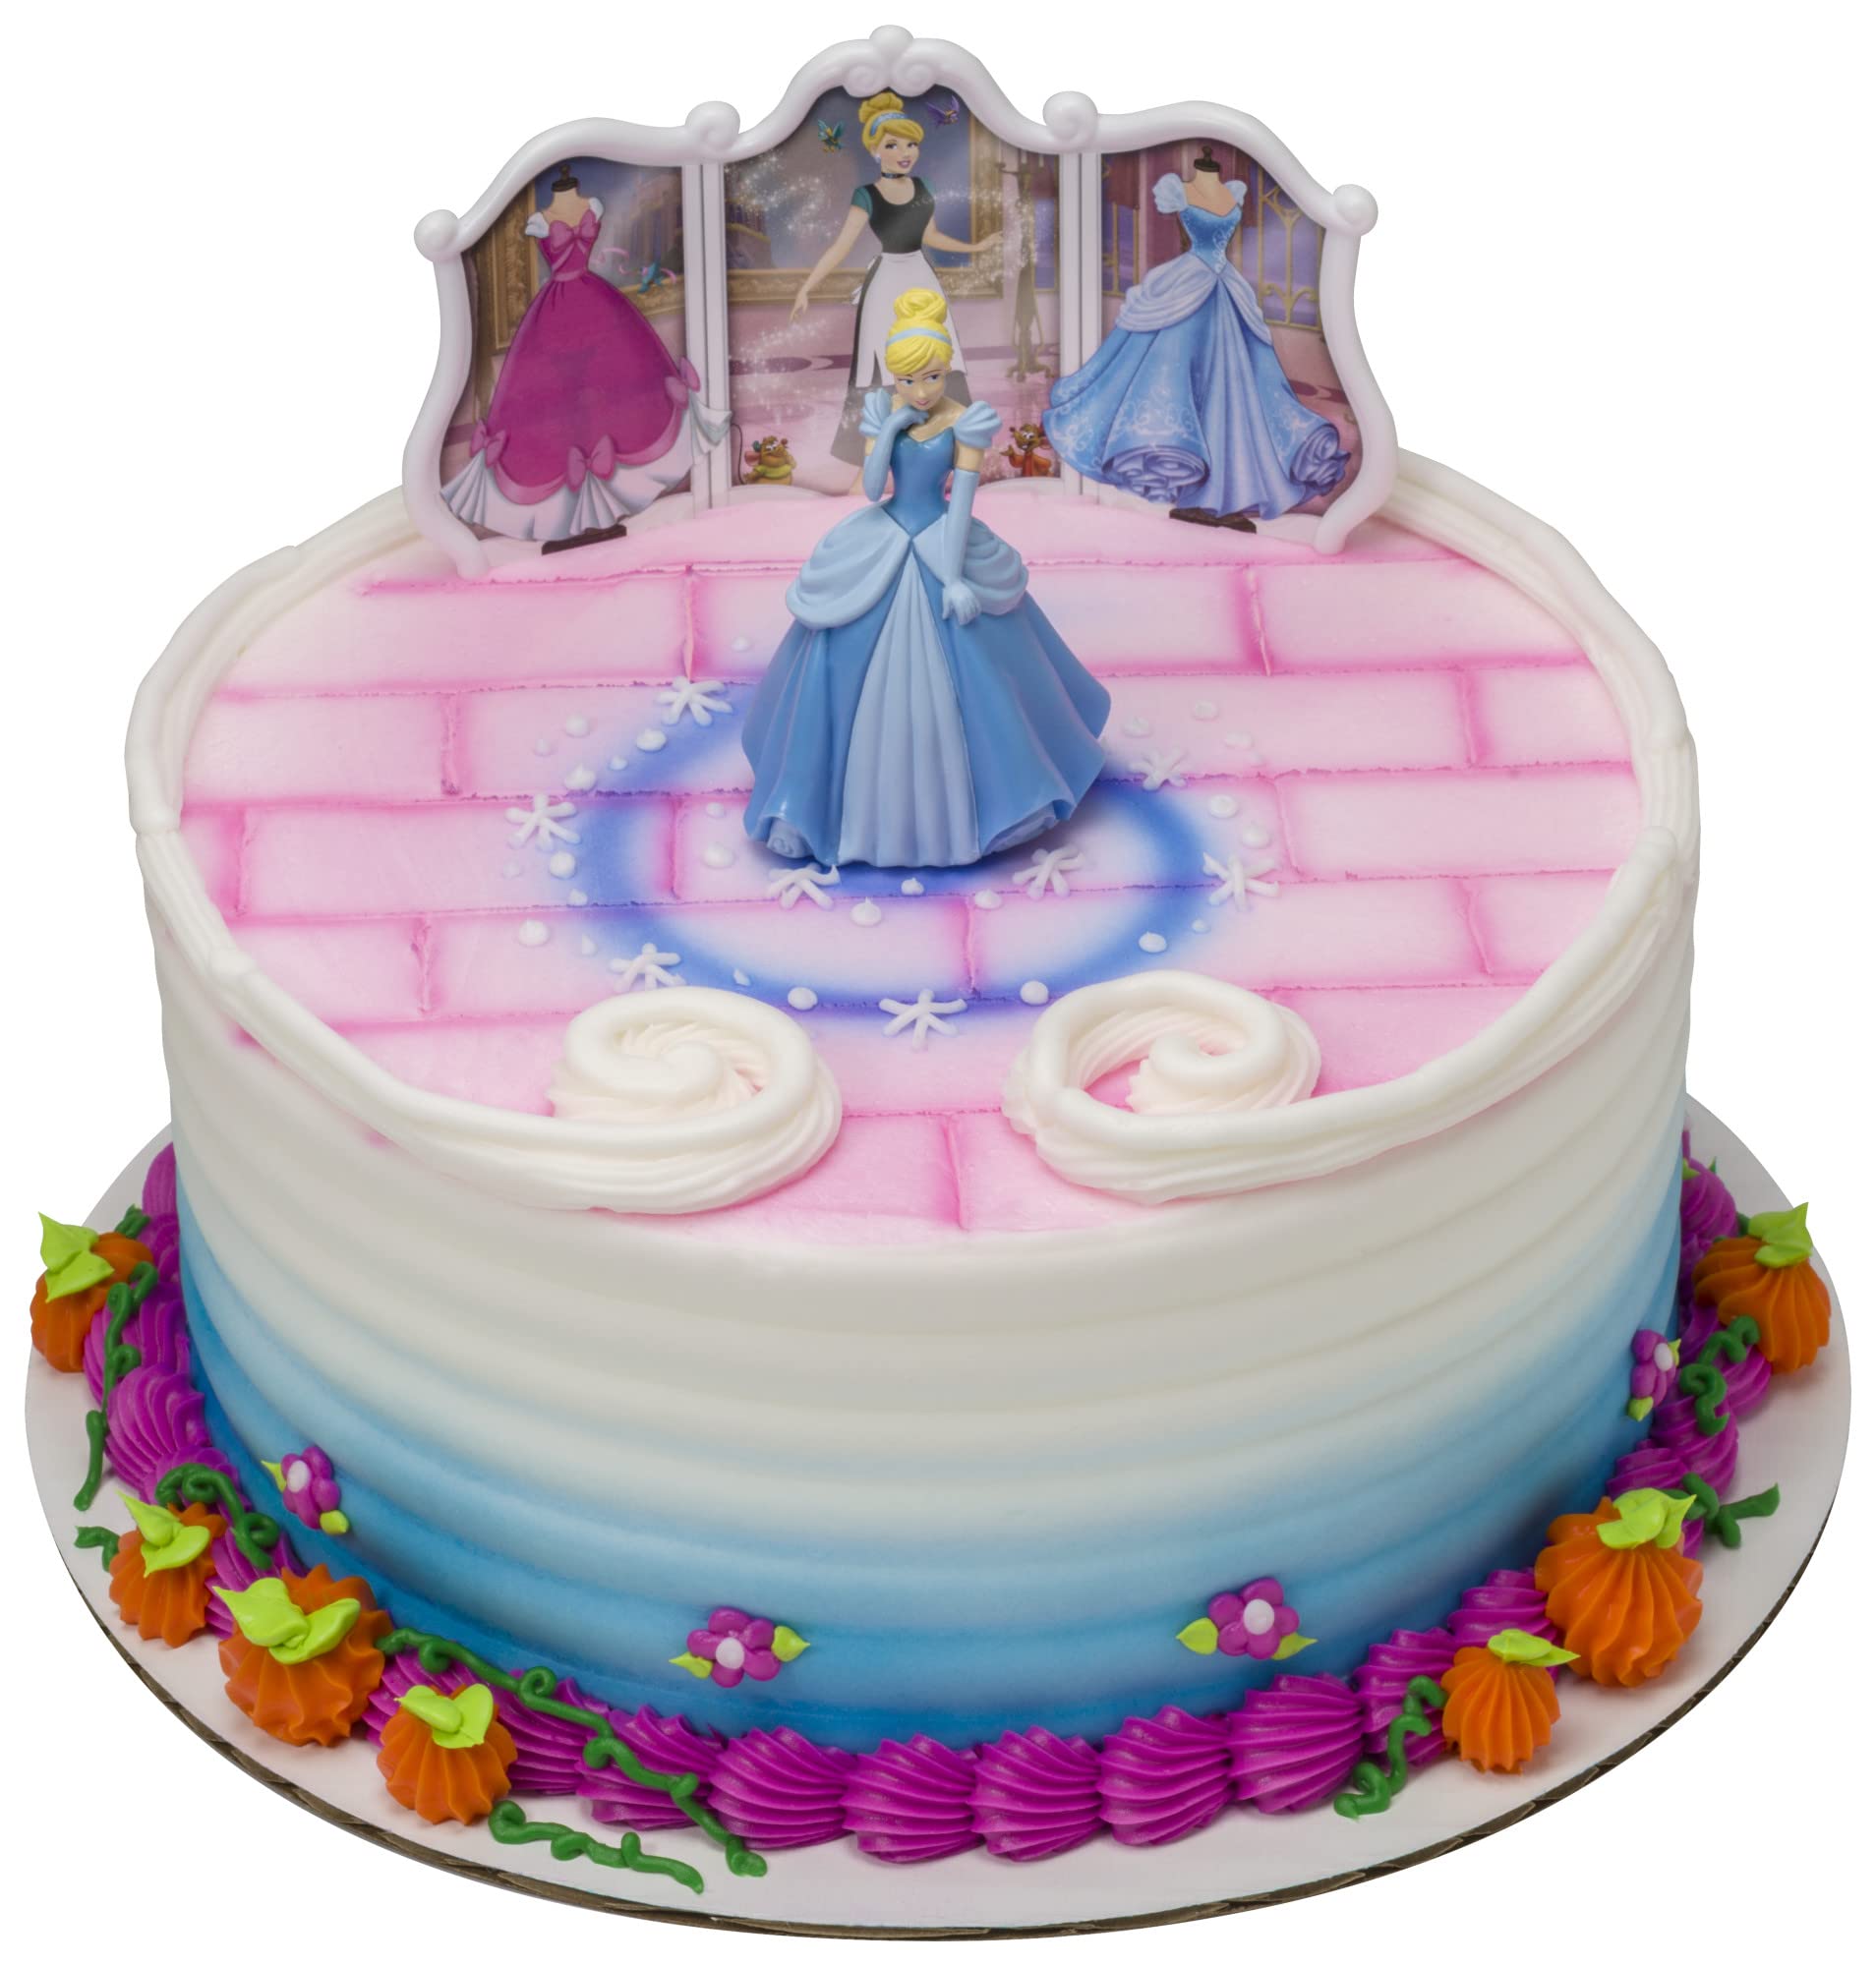 DecoSet® Disney Princess Cinderella Transforms Cake Topper, 4-Piece Birthday Cake Decorations Set with Figurine and Dress Stickers